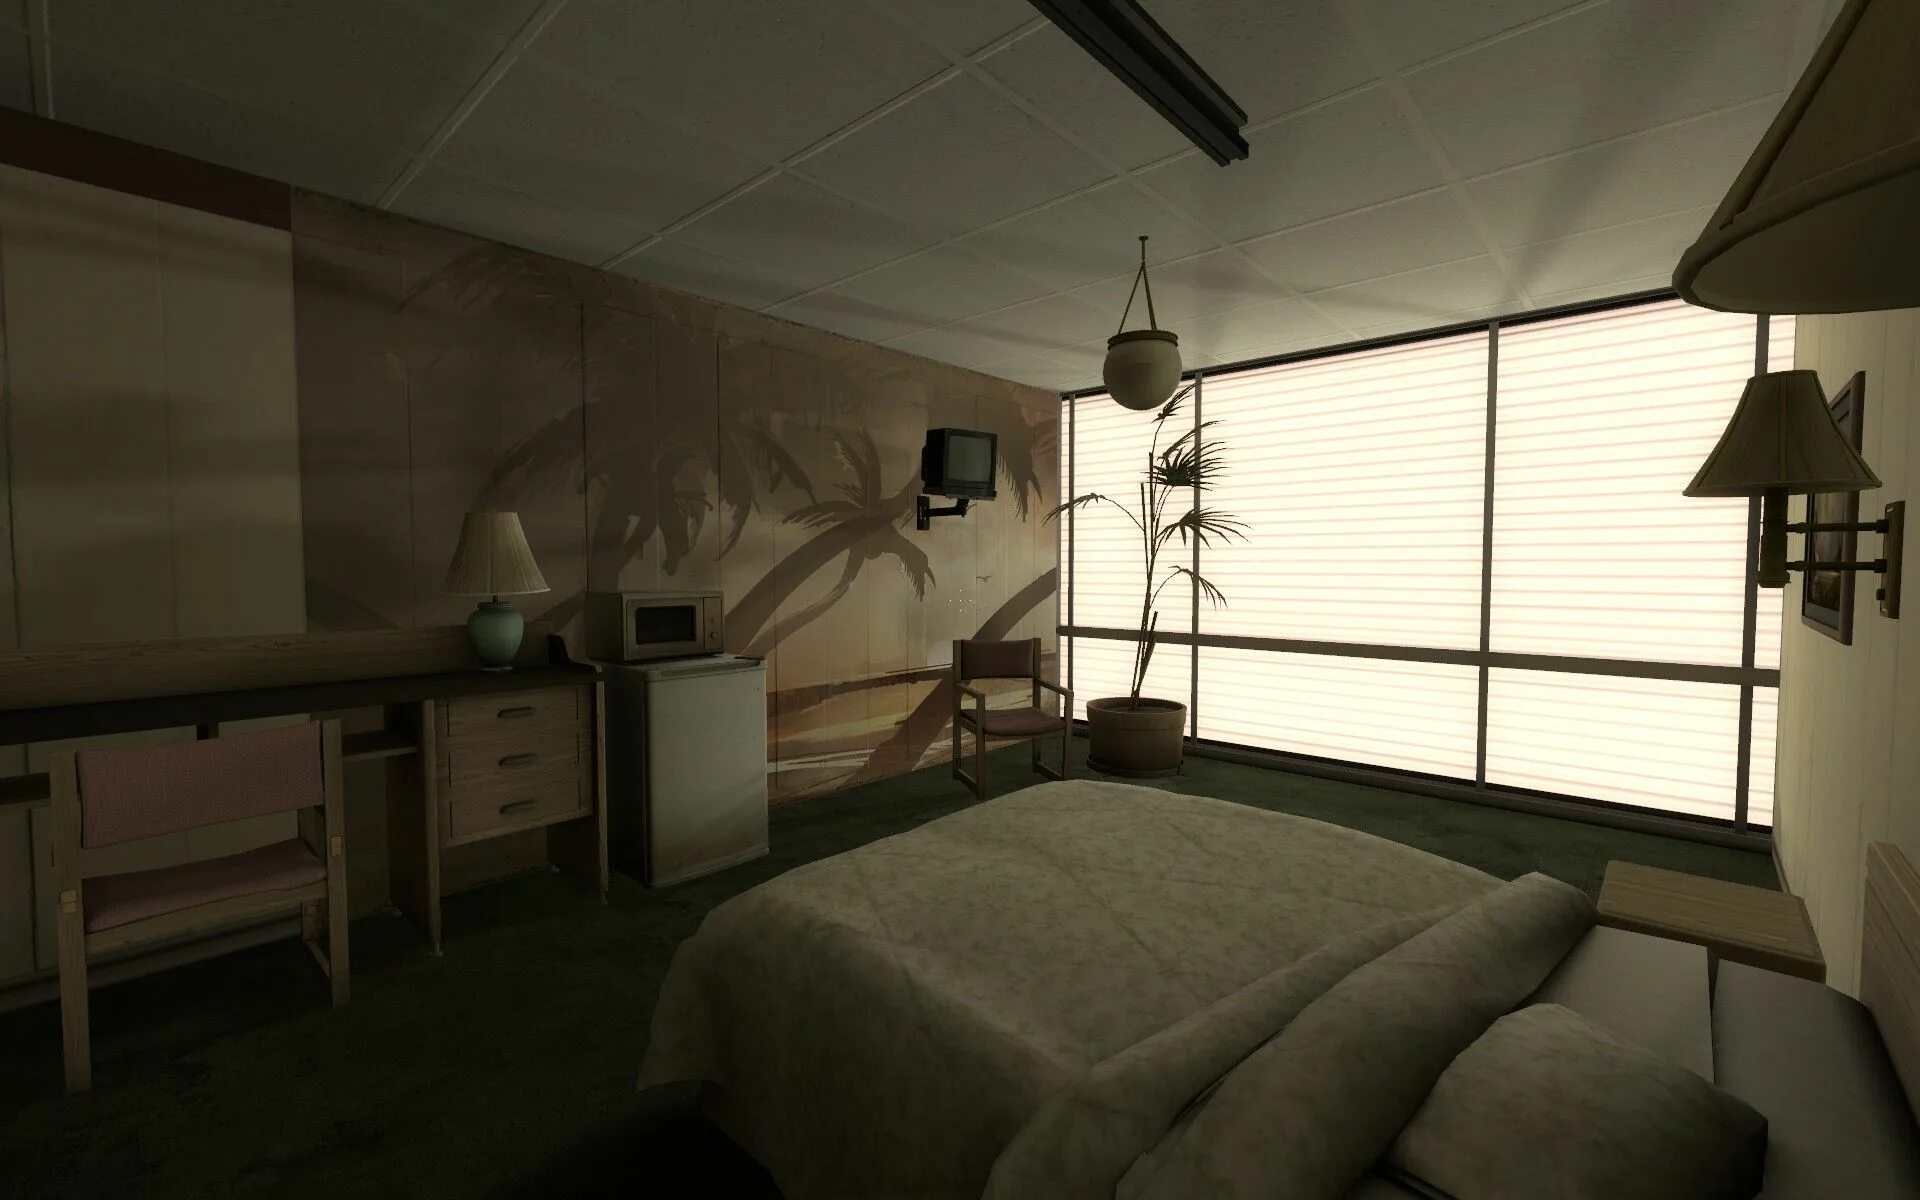 Соседная комната. Portal 2 комната. Портал 2 начальная комната. Комната 2д. Комната от первого лица.